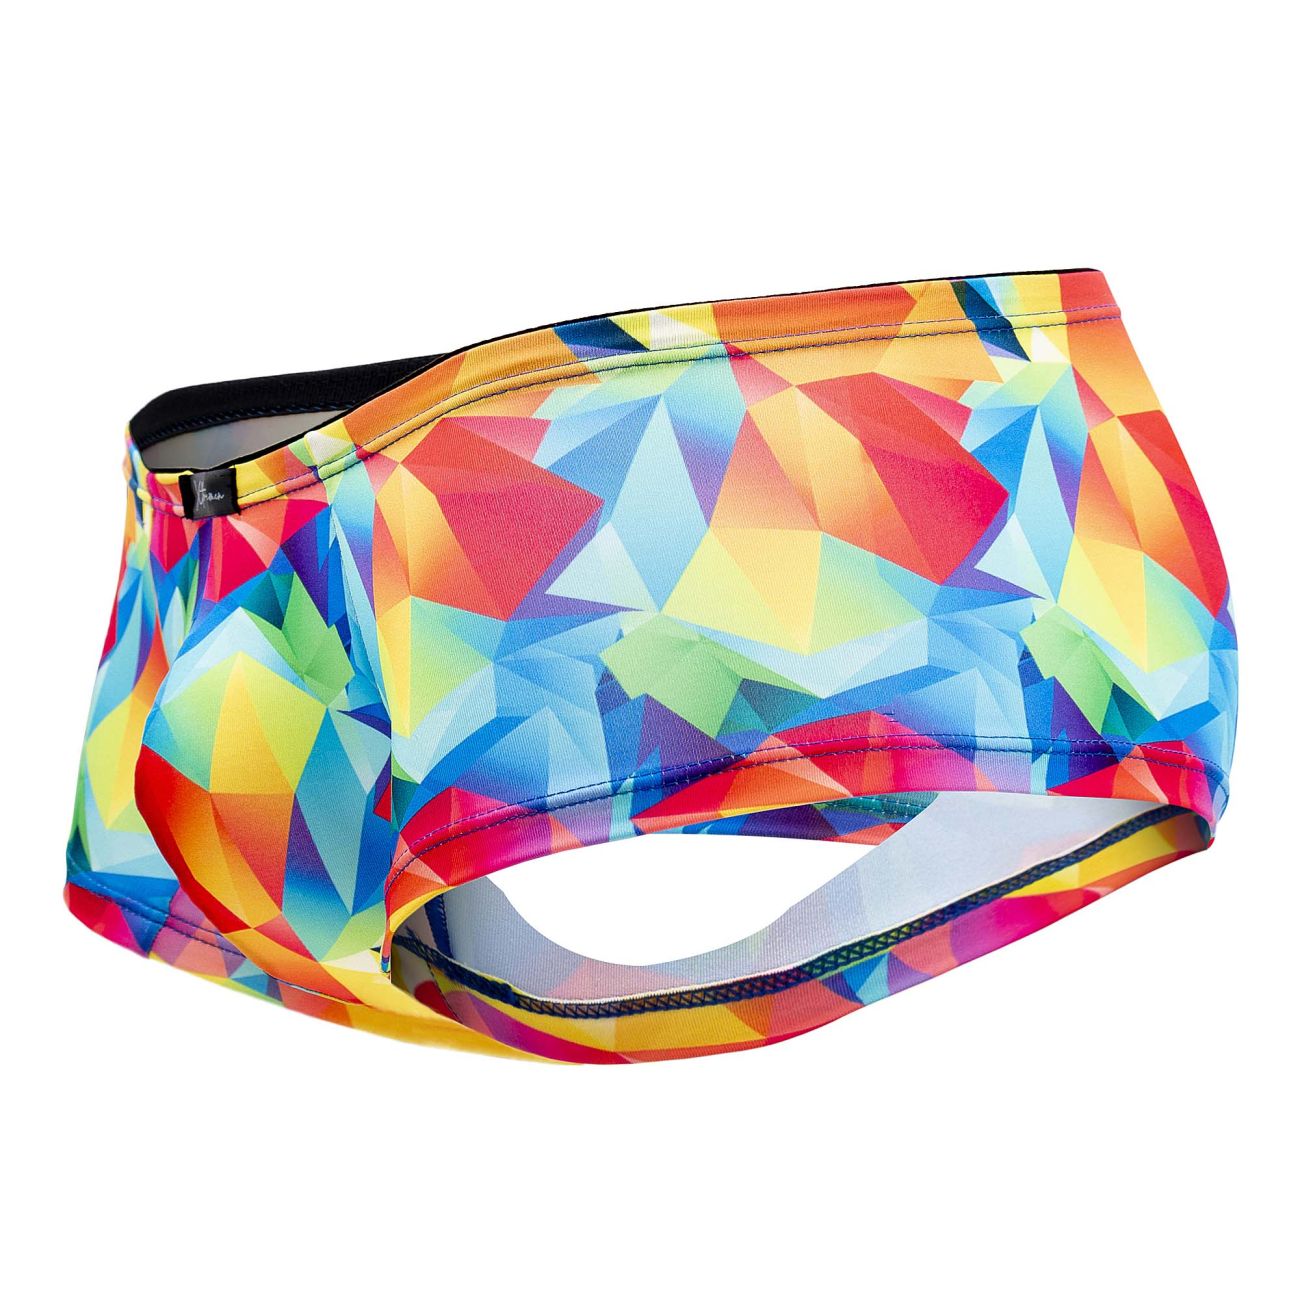 Xtremen Printed Microfiber Trunk Rainbow Prism Underwear- CITYBOYZ★USA